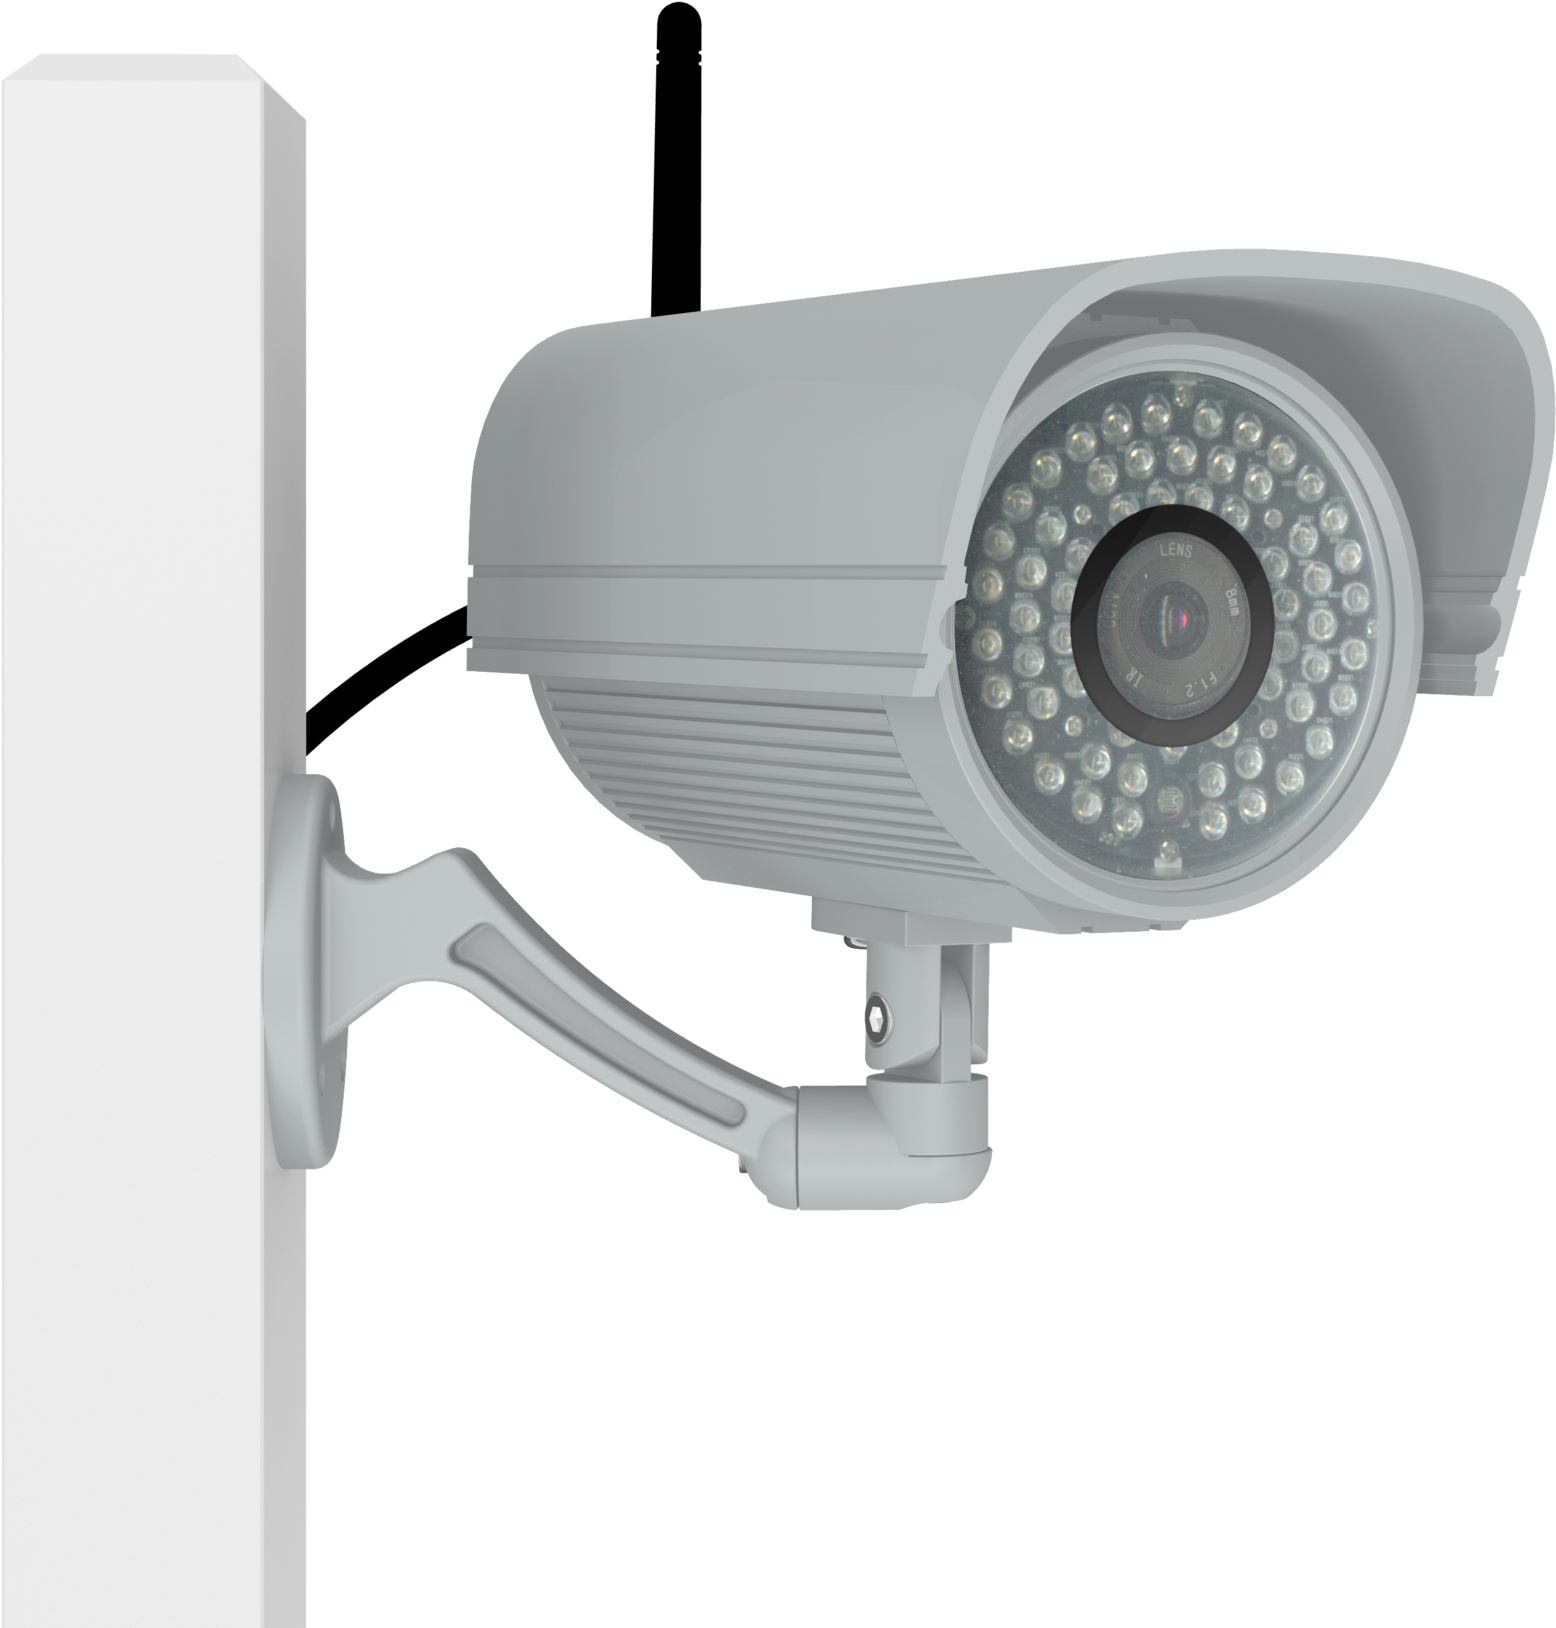 Surveillance Camera Png - Clip Art Library